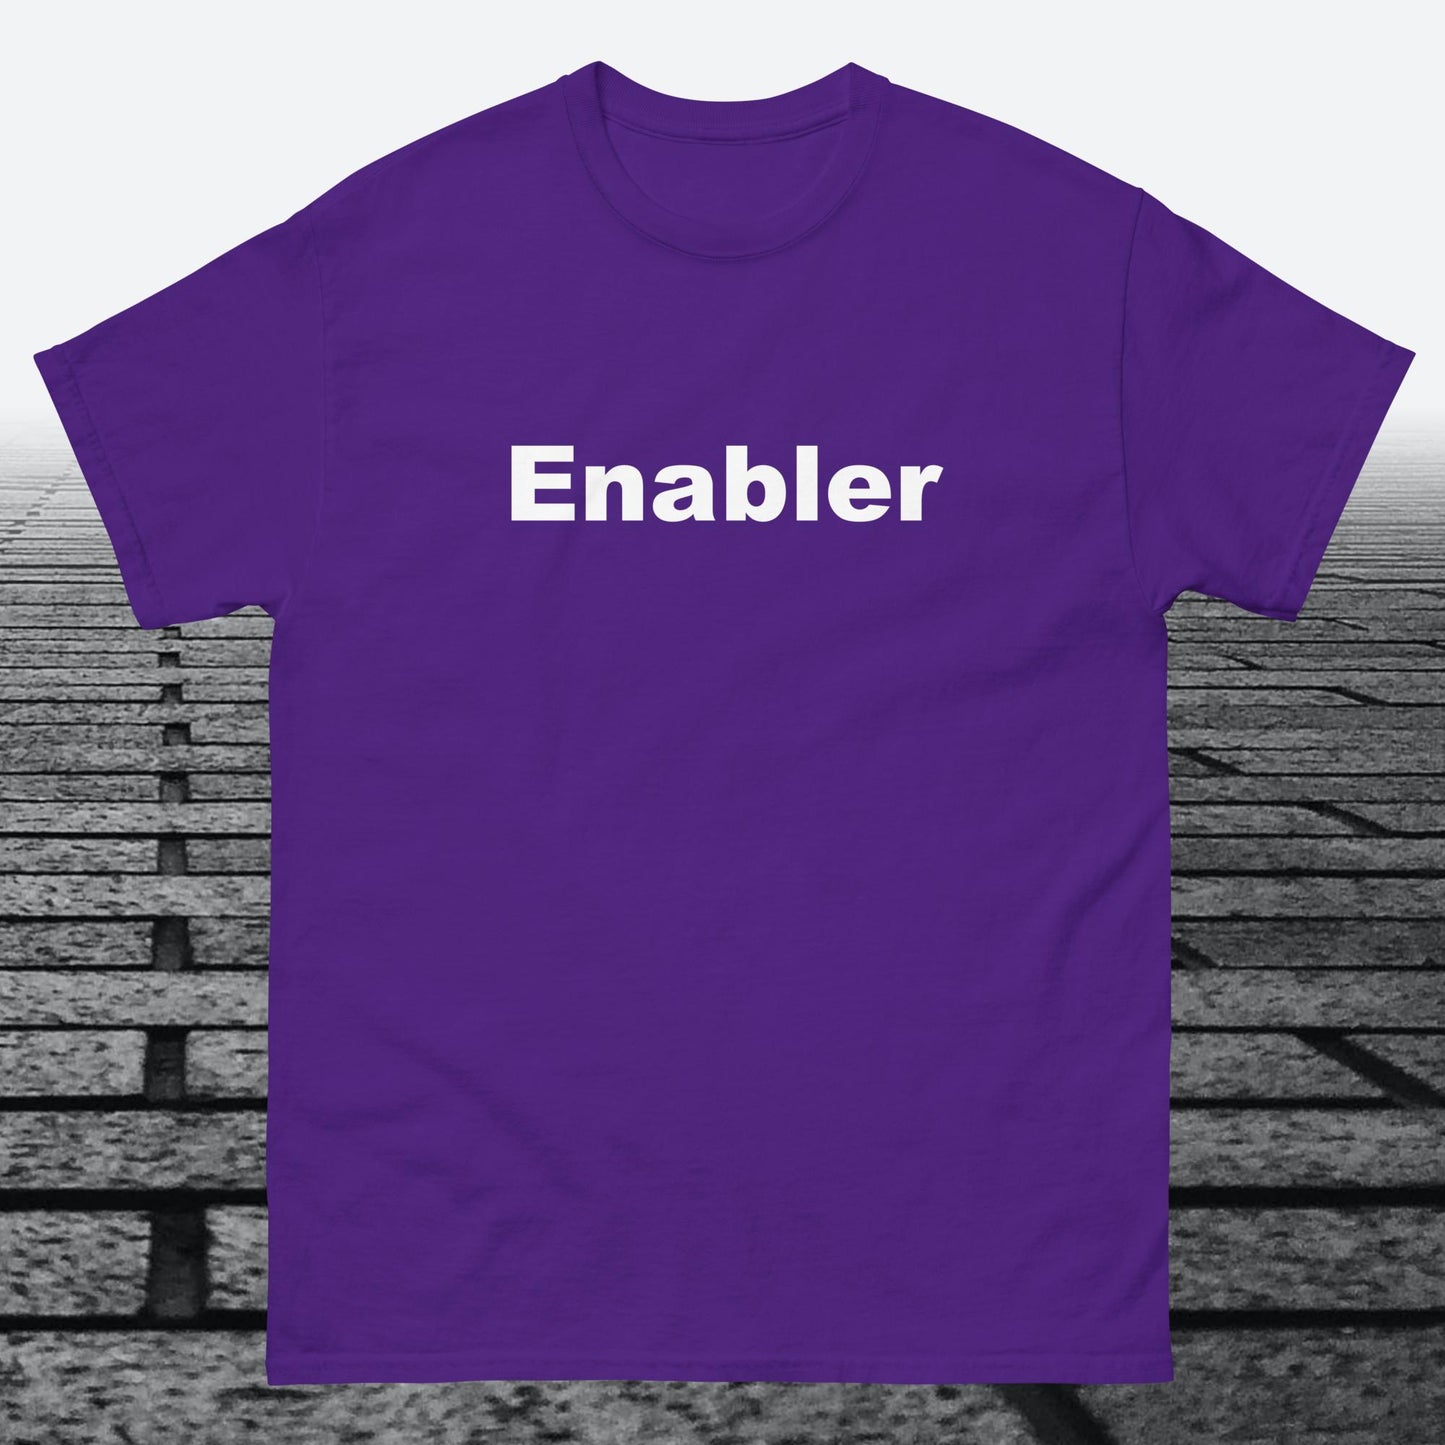 Enabler, Cotton T-shirt